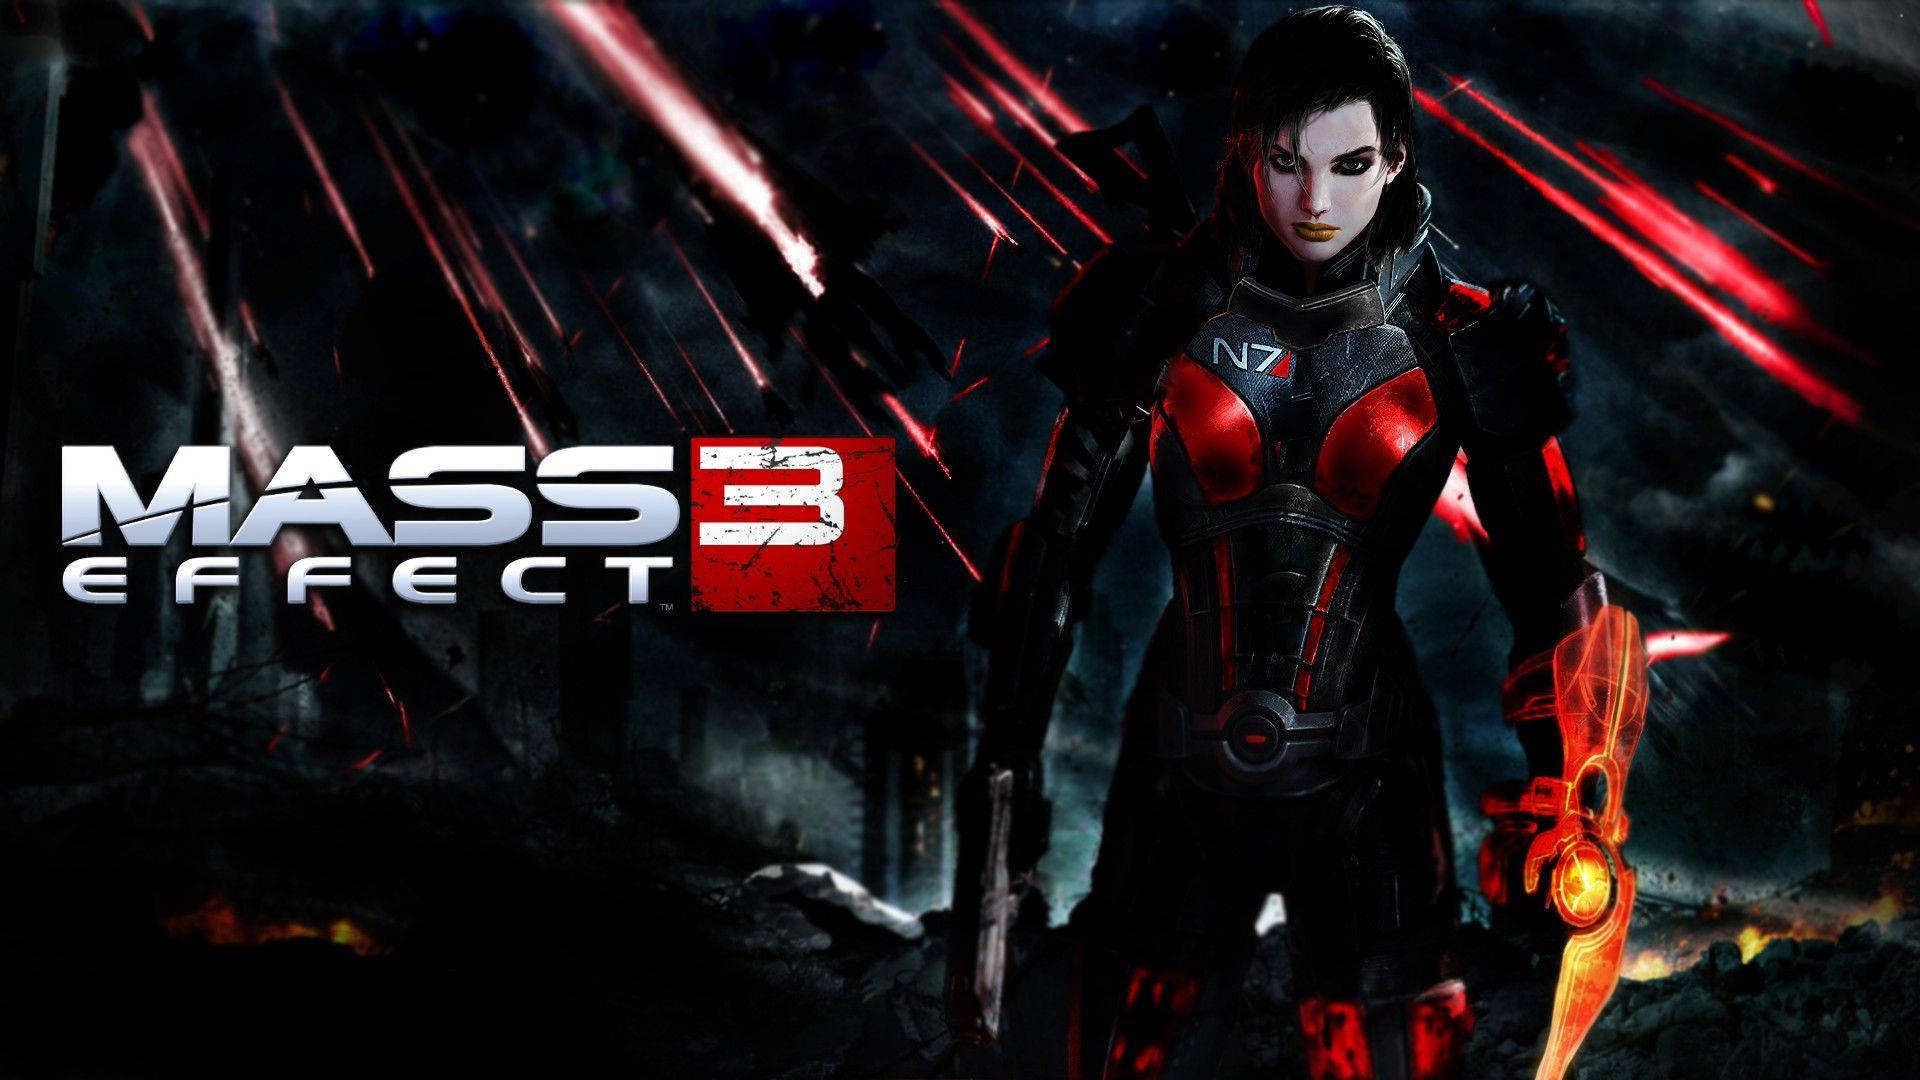 Mass Effect 3 Femshep In Red And Black Armor Wallpaper